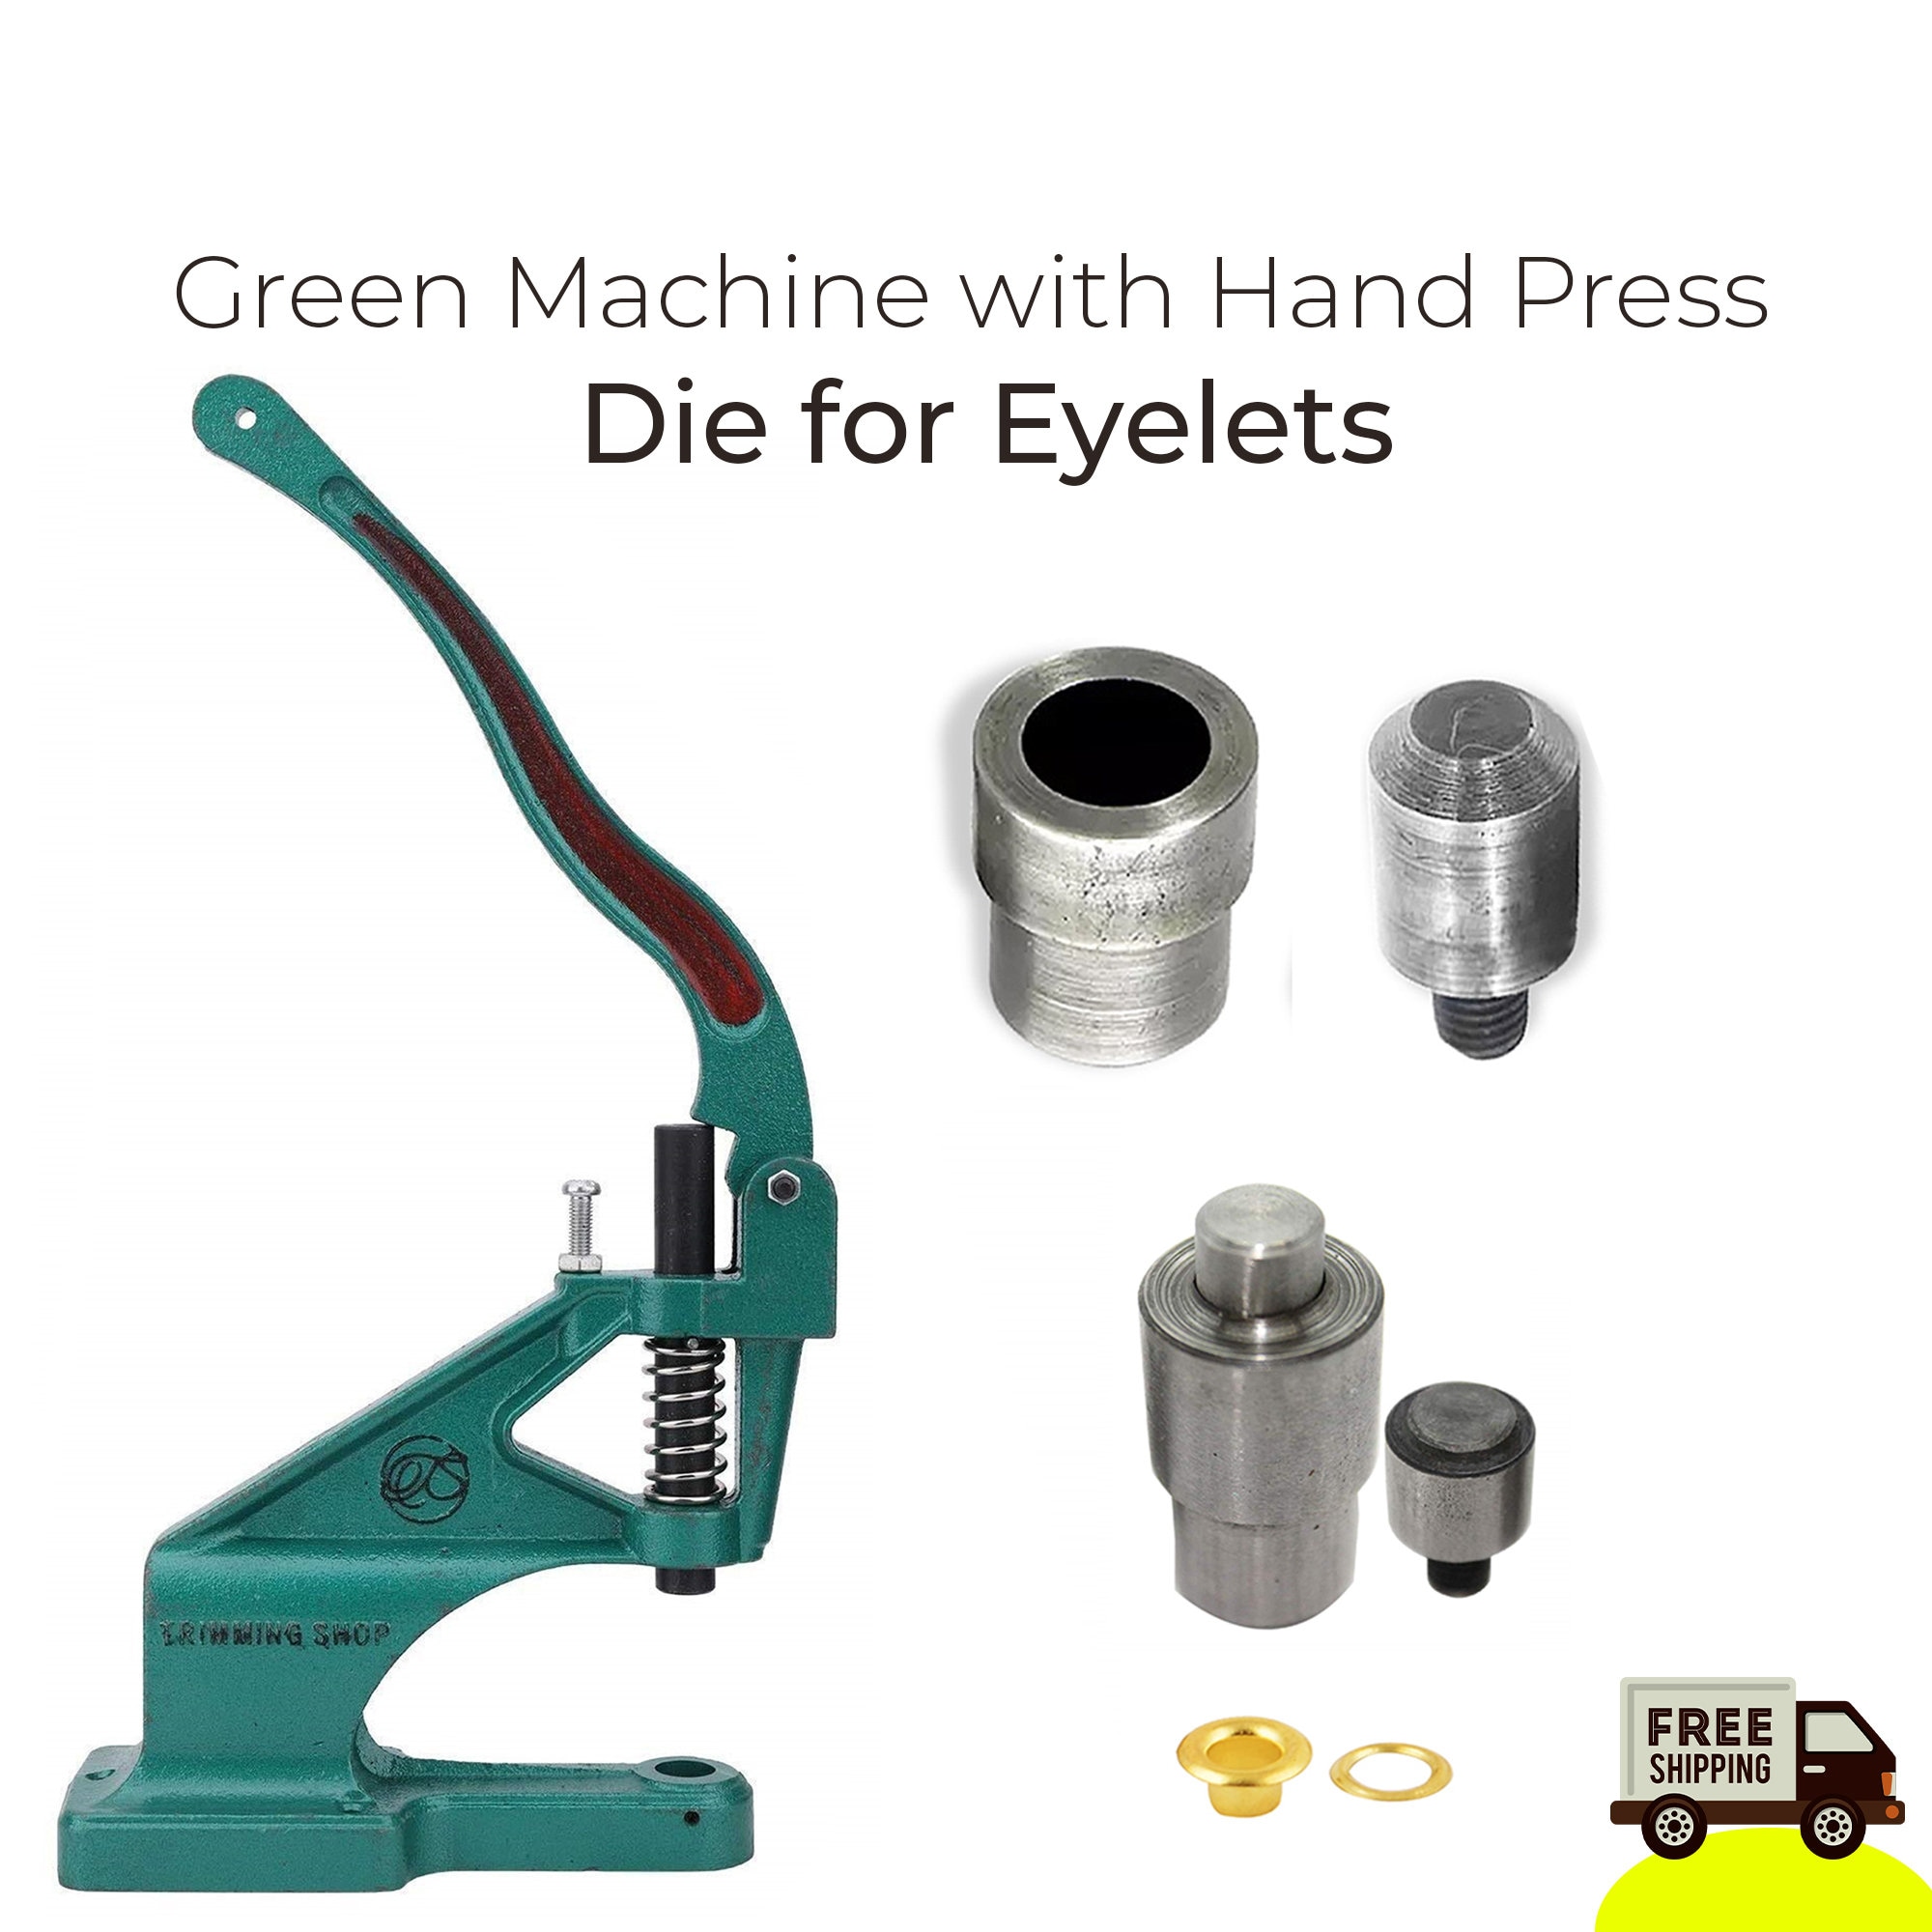 2mm-20mm Eyelet Grommet Dies for Green Hand Press Machine Dies 